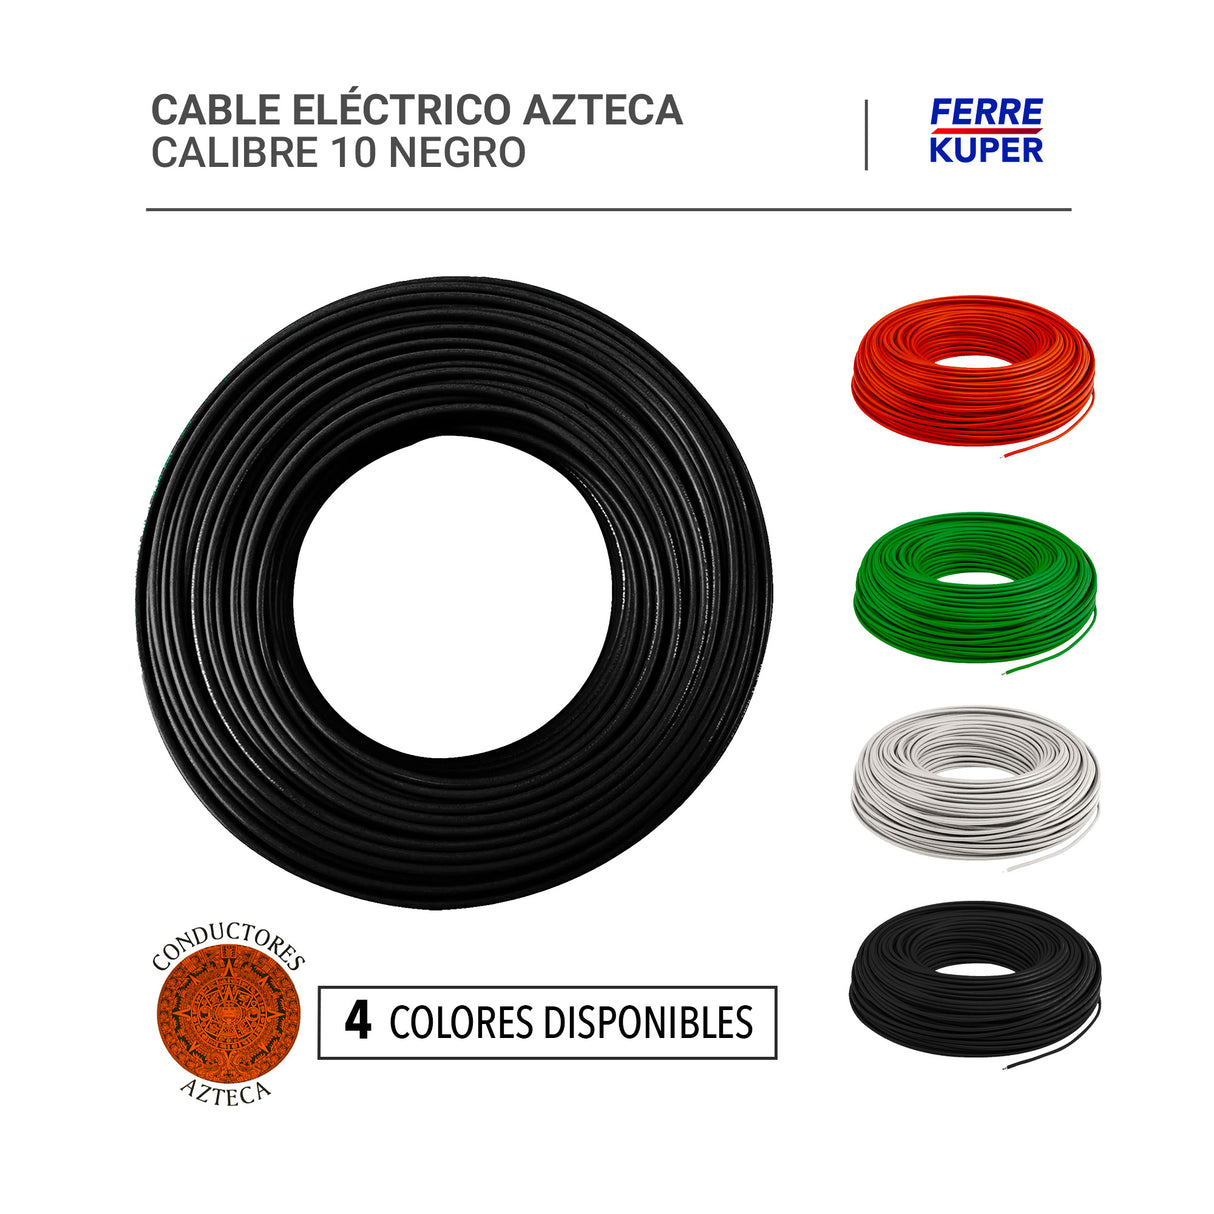 Cable Eléctrico Azteca THW Calibre 10